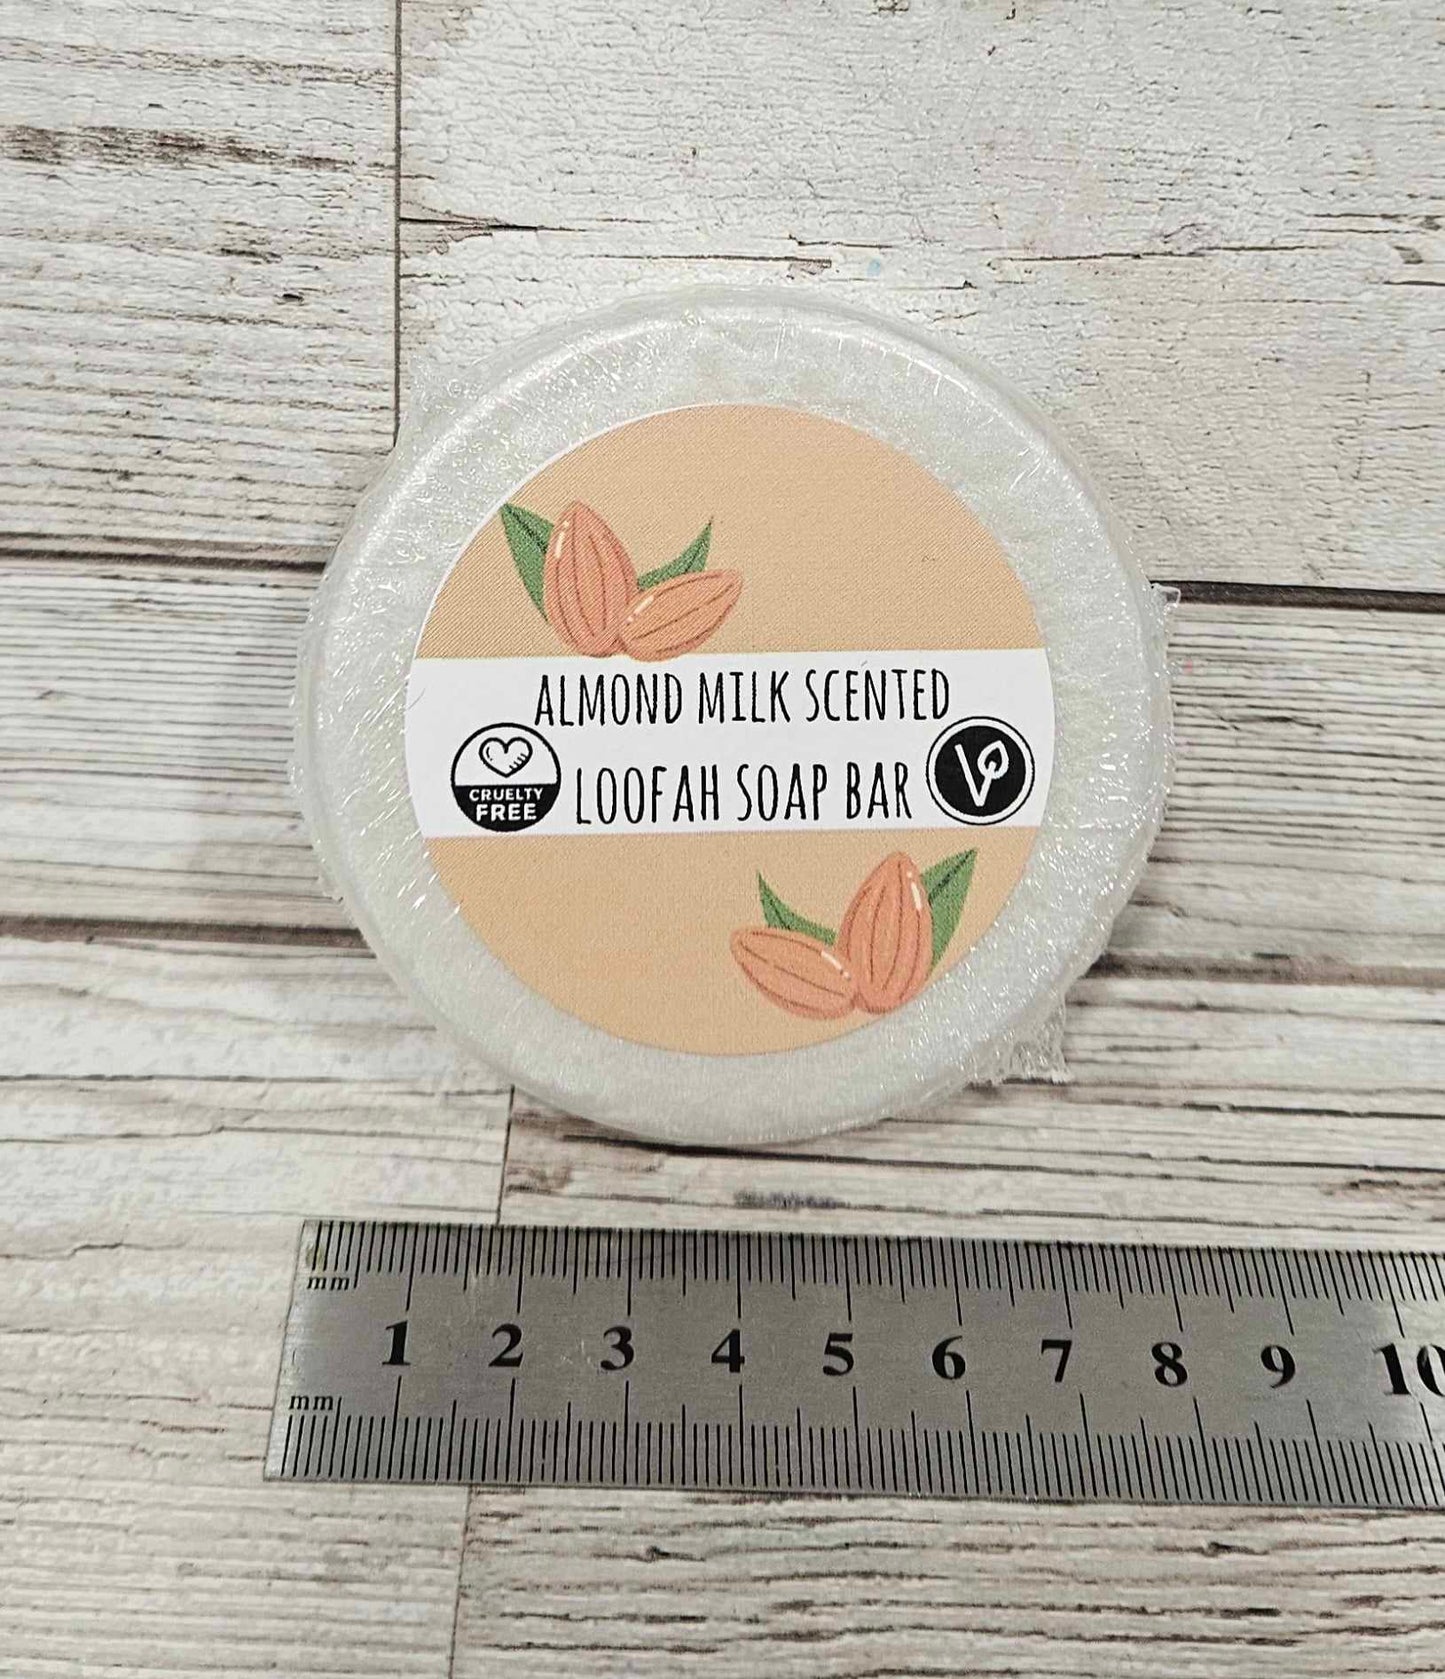 'Almond Milk Scented' Loofah Soap Bar